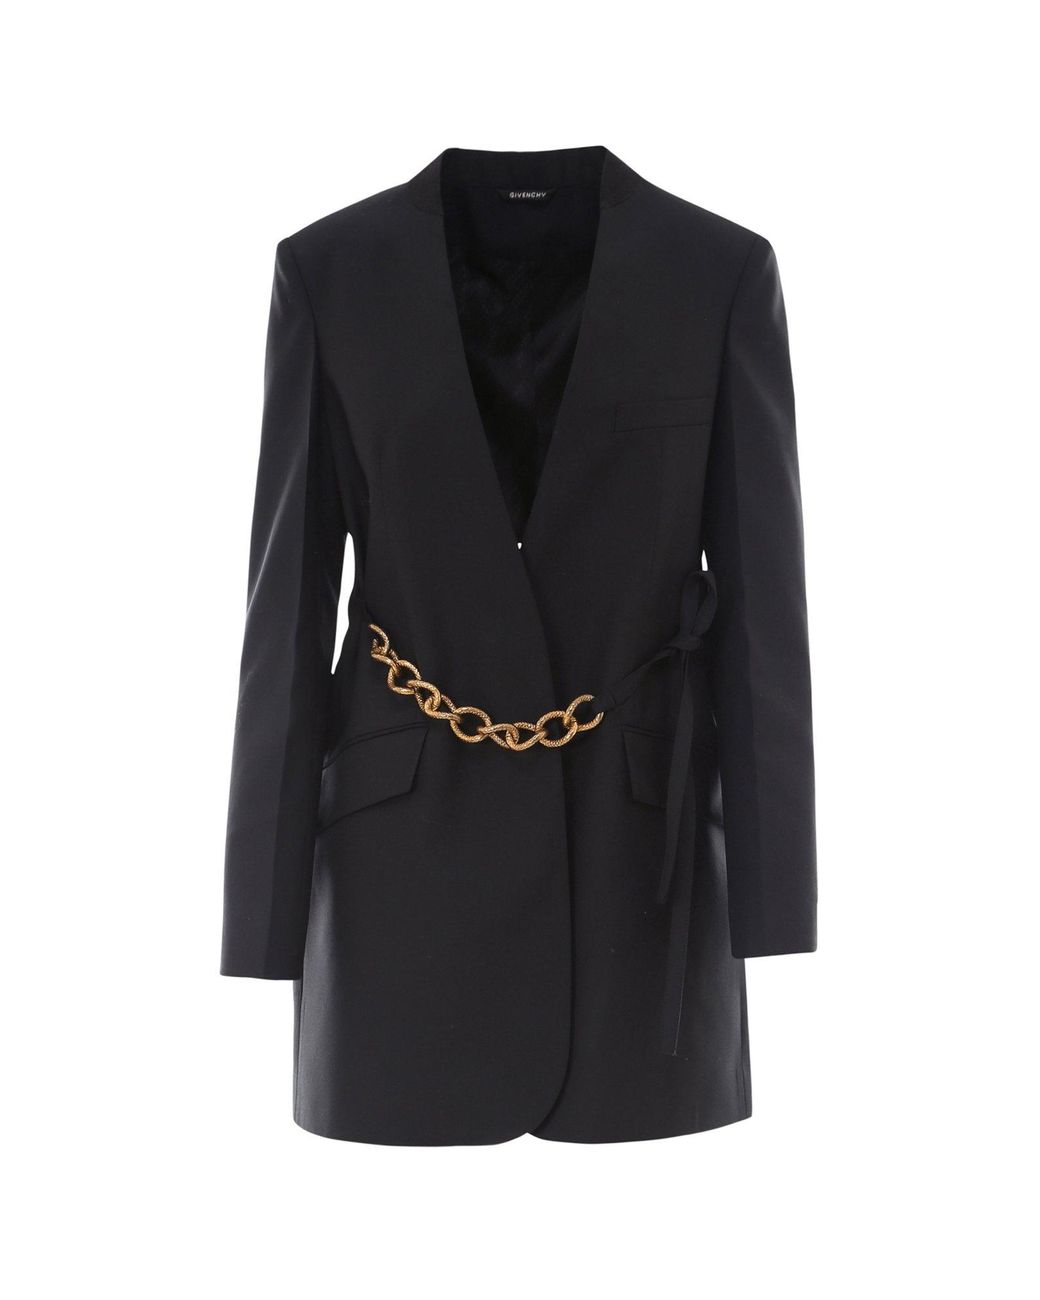 Givenchy Wool Chain Detail Blazer in Black - Lyst